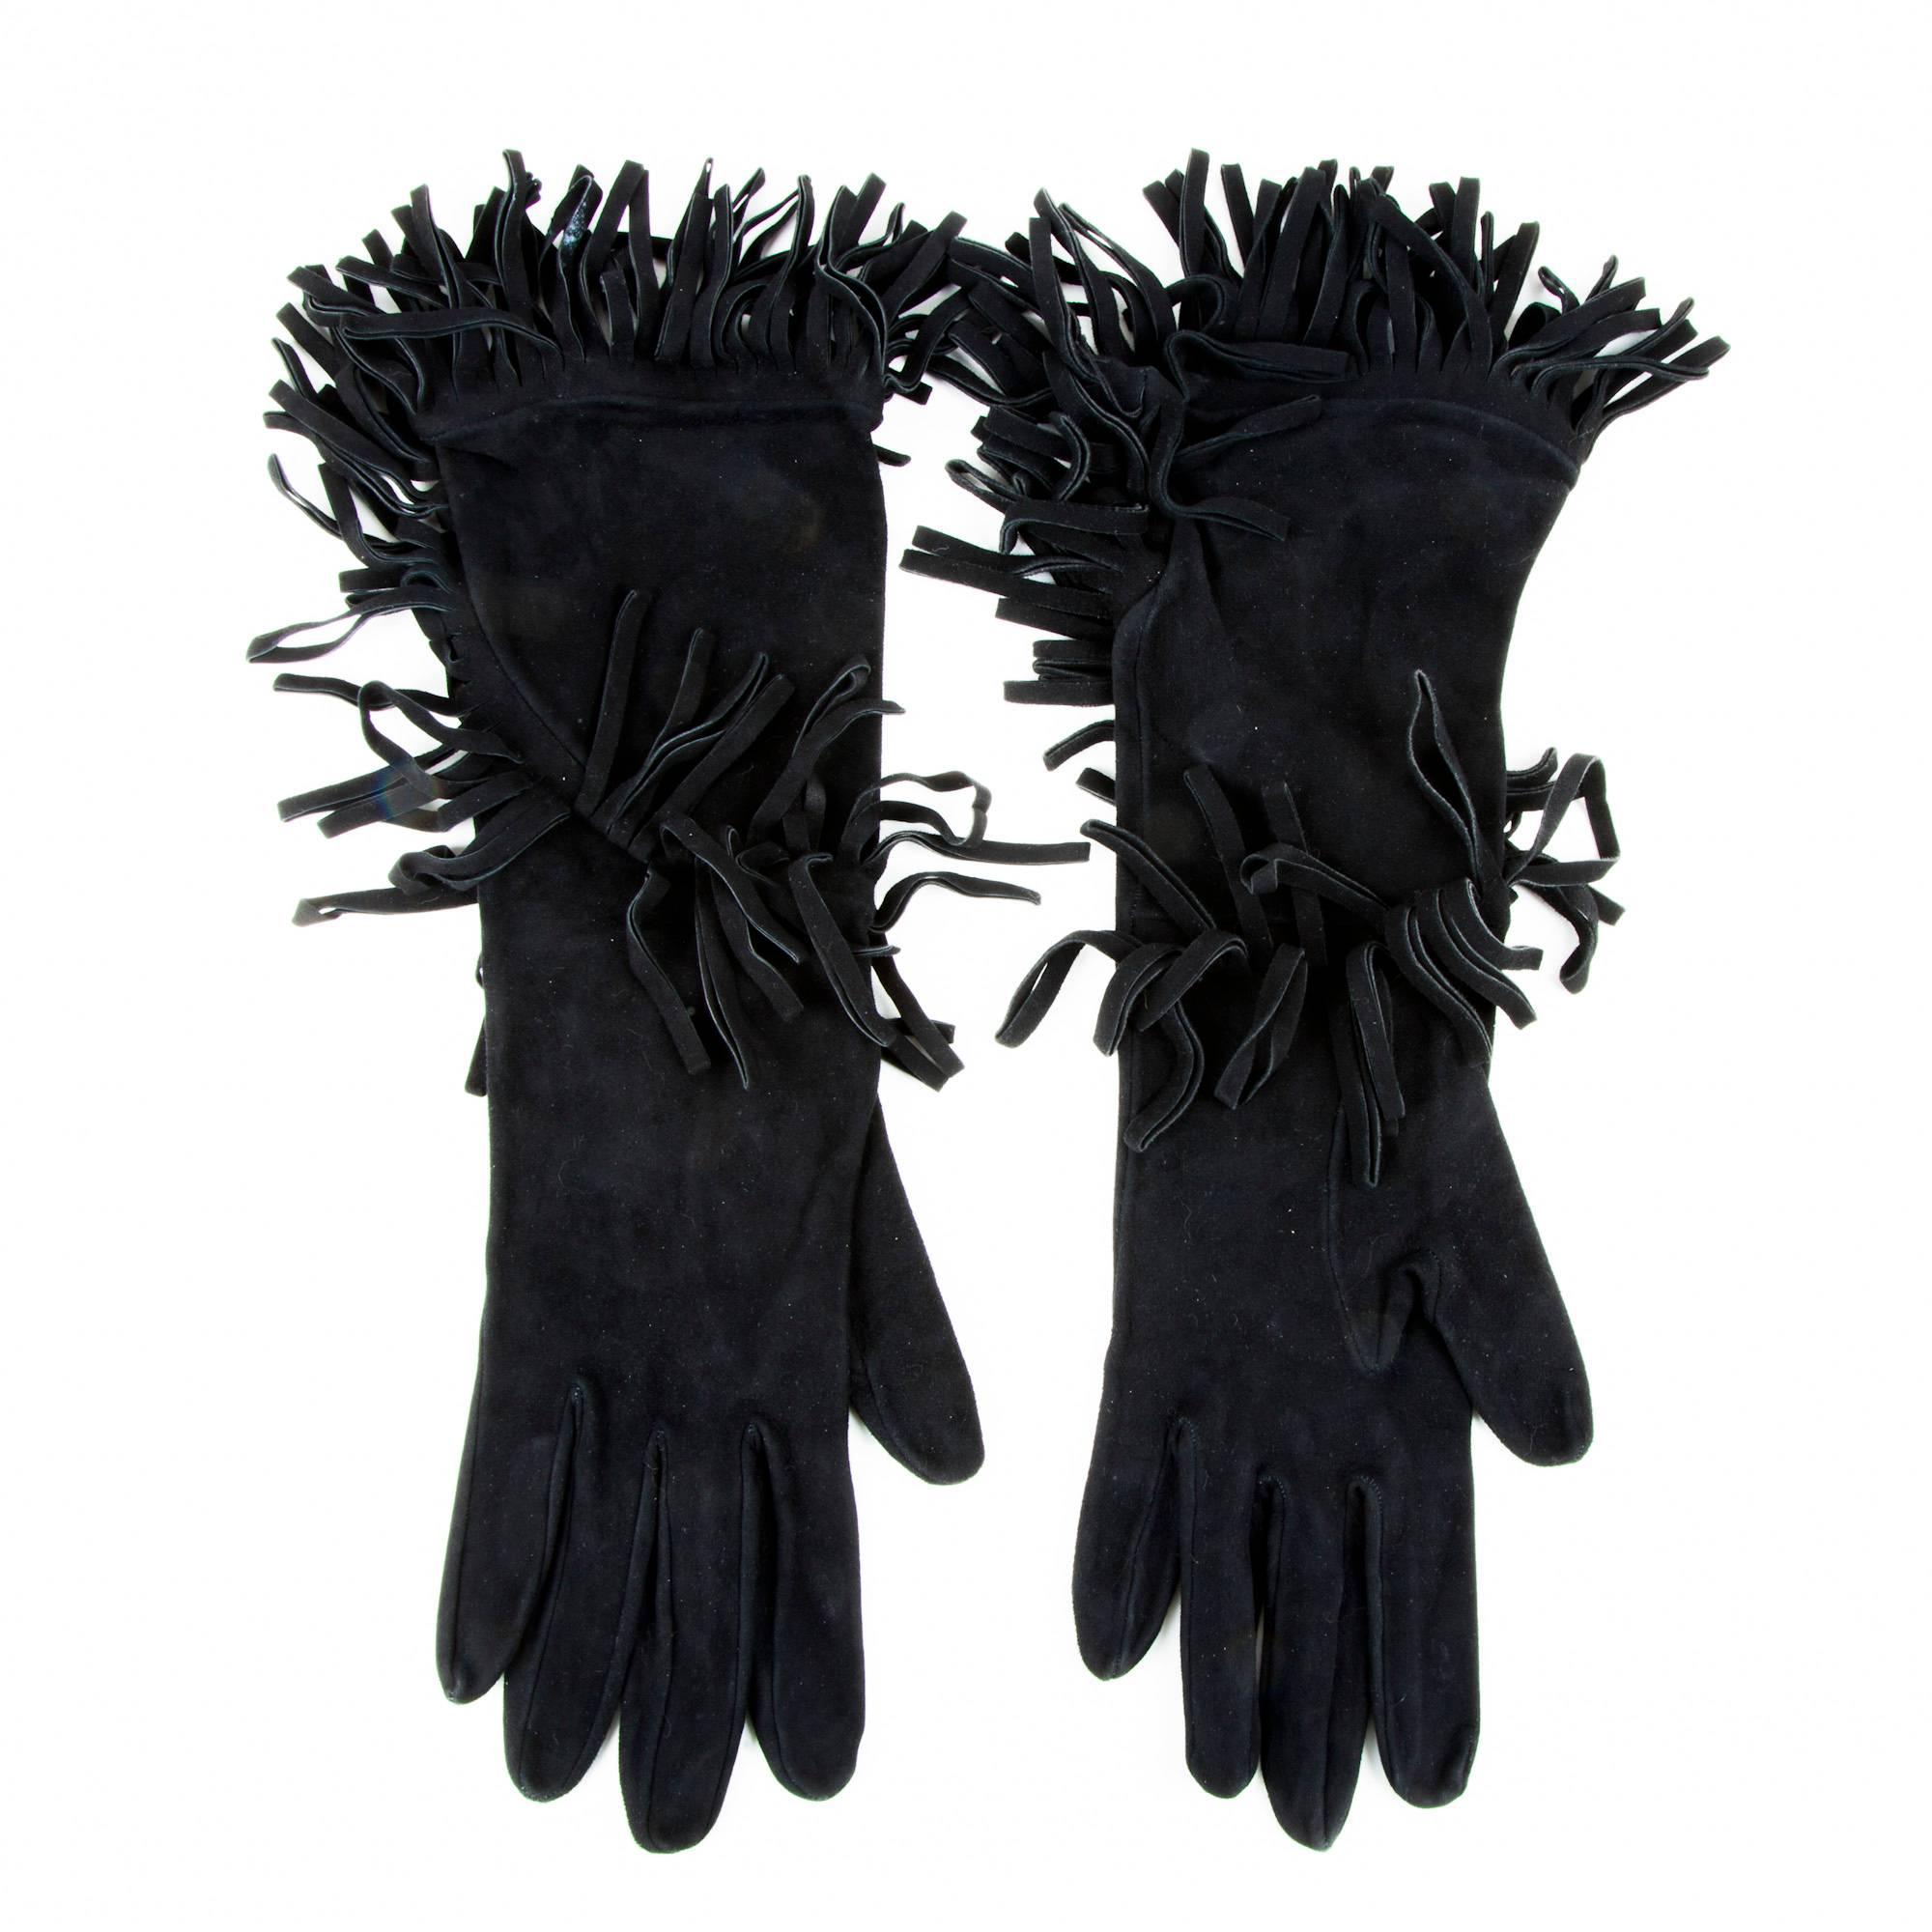 HERMES Mid-Length Fringed Gloves in Black Suede Size 7.5 EU 1